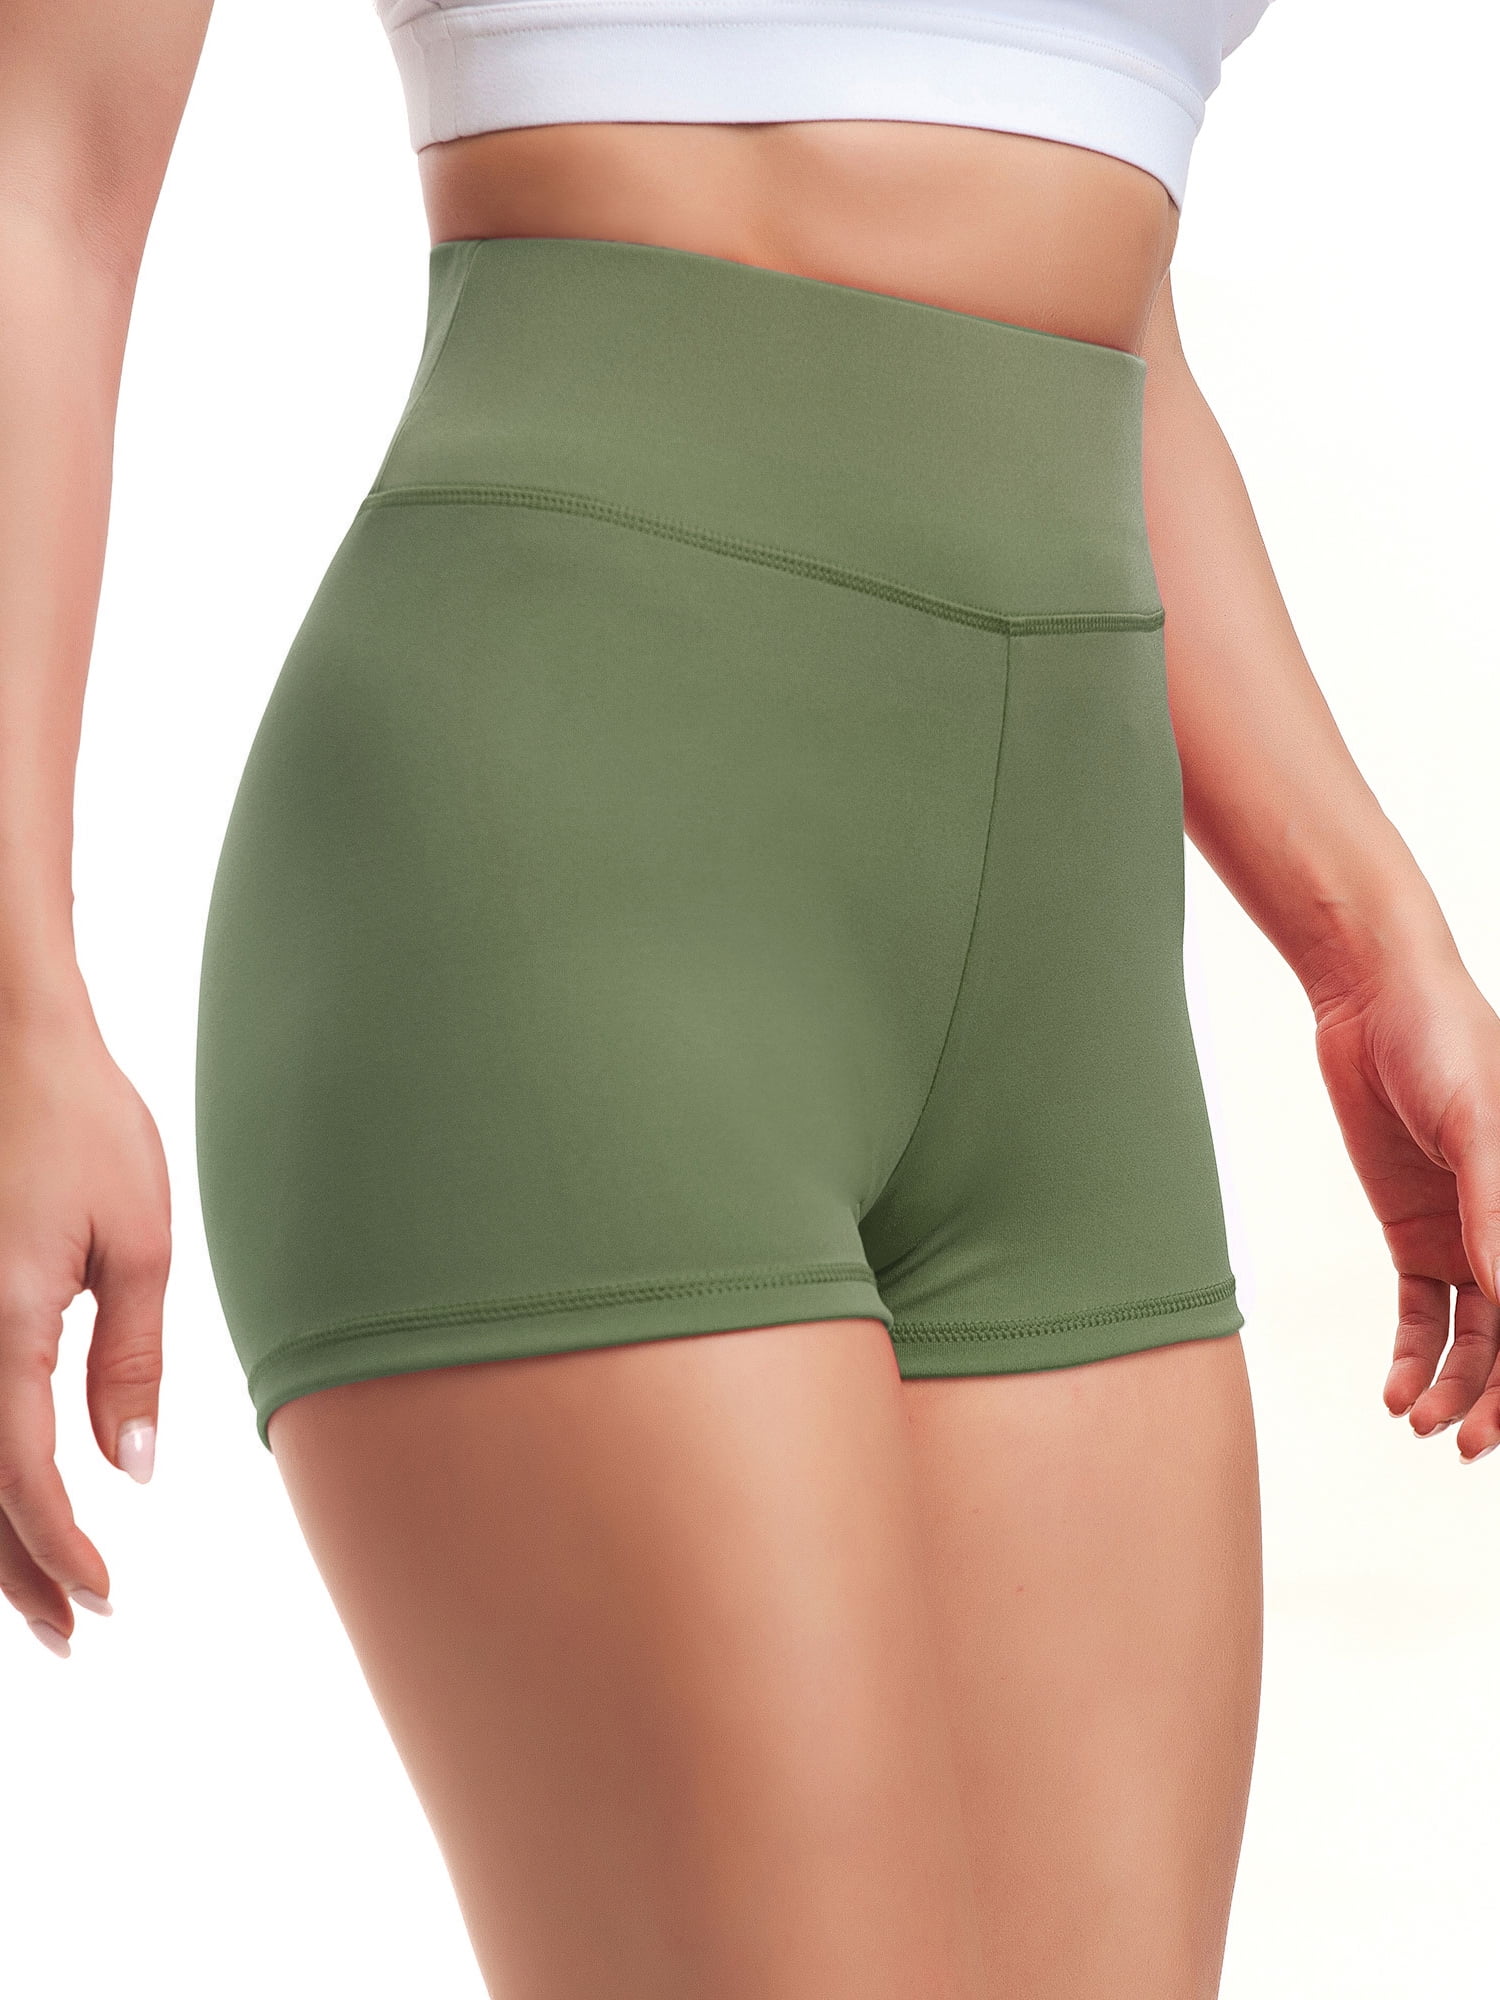 Dodoing Womens Booty Shorts Casual Cotton Yoga Short Shorts Mini Hot Pants Sport Leggings Fold